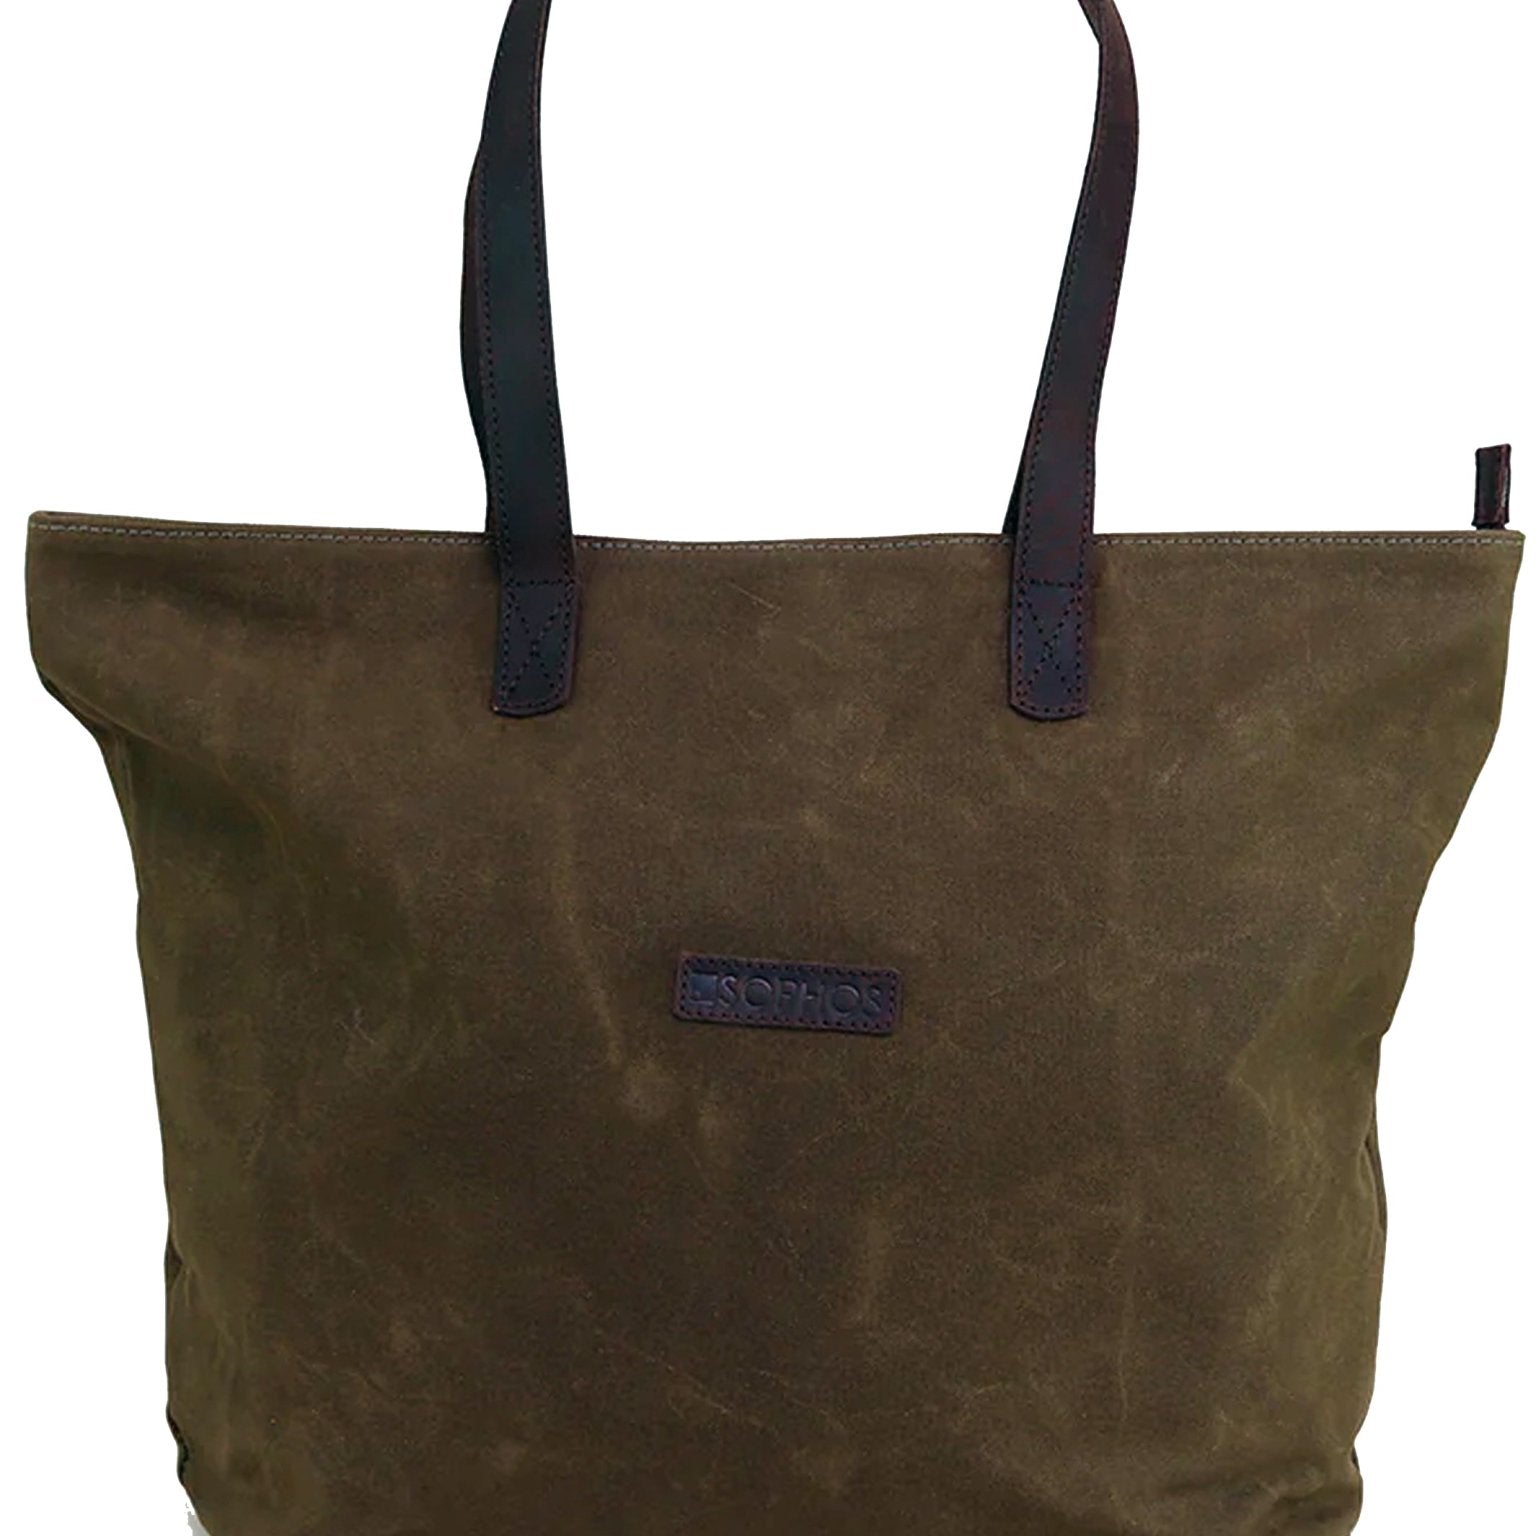 4elementsclothingThe British Bag CompanyBritish Bag Company - Waxed Canvas Tote Bag - Premium weight leather trim tote bagBag795108